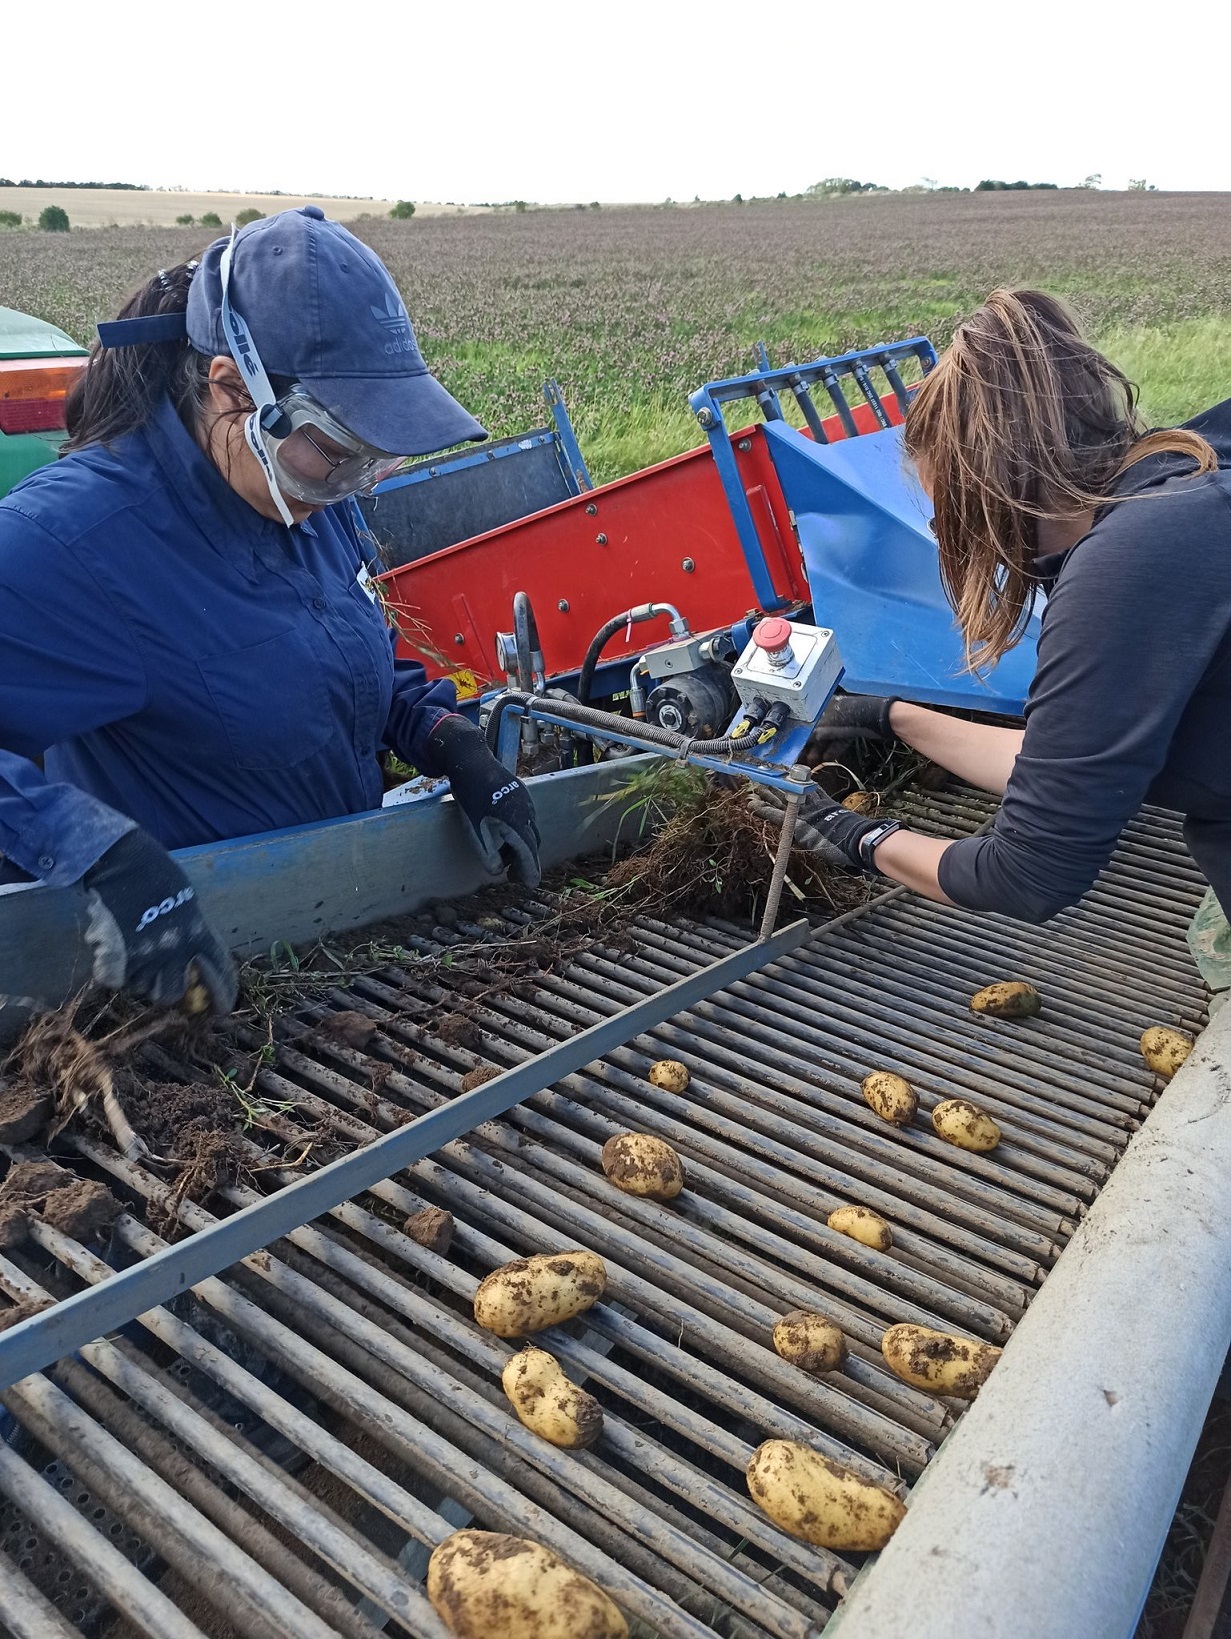 Potato and wheat harvesting in England, United Kingdom